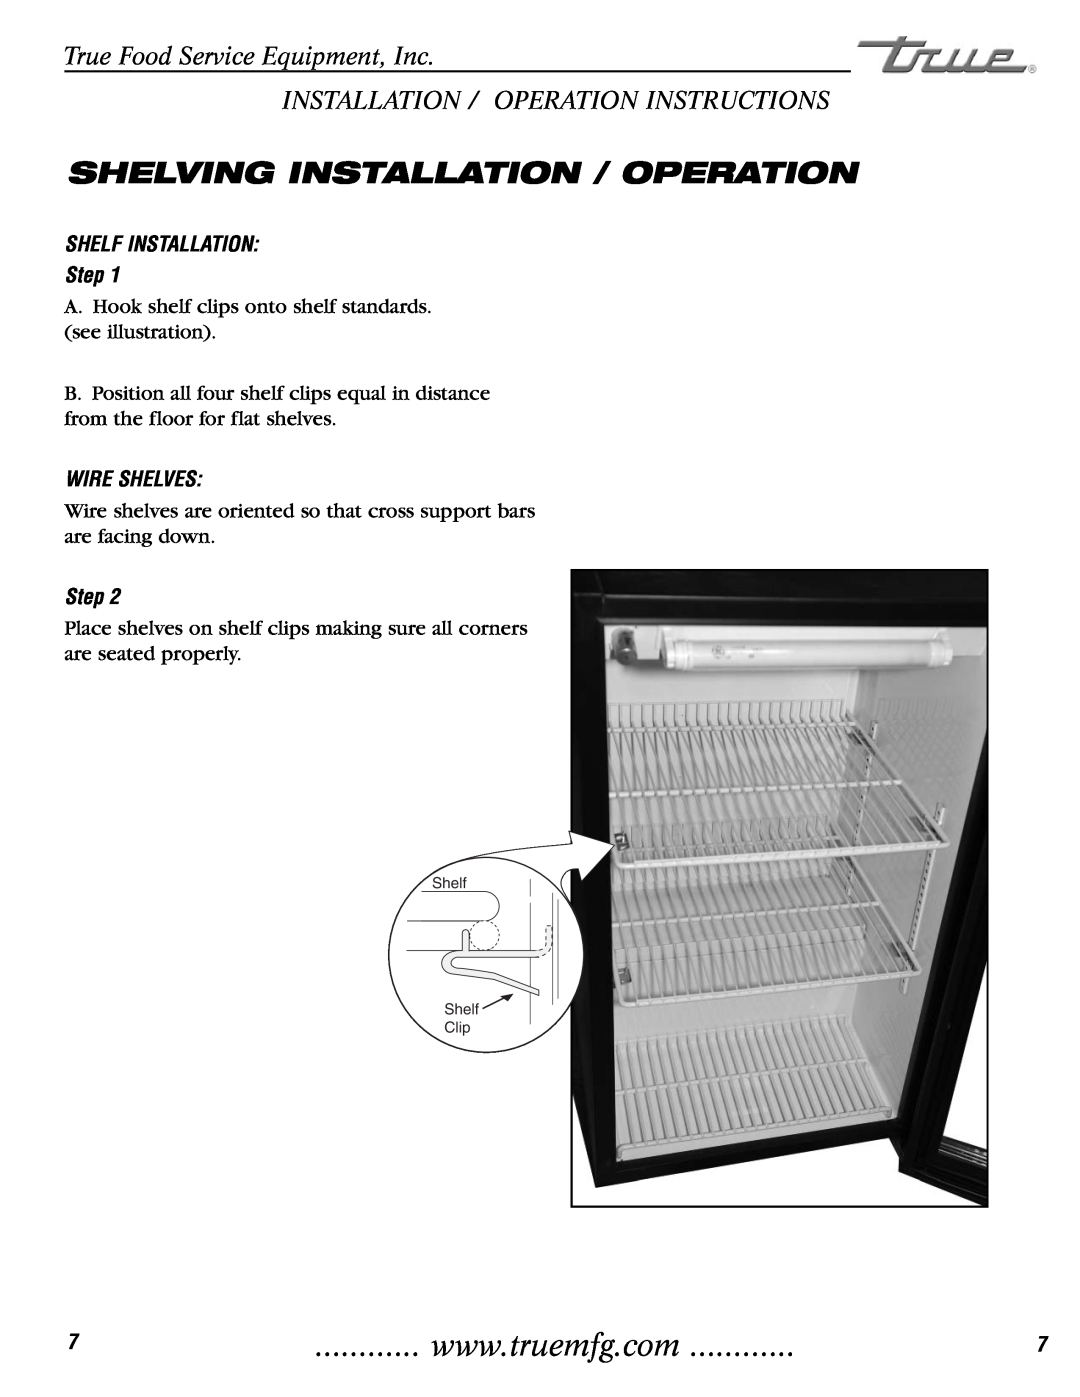 True Manufacturing Company GDM-3 Shelving Installation / Operation, SHELF INSTALLATION Step, Wire Shelves 